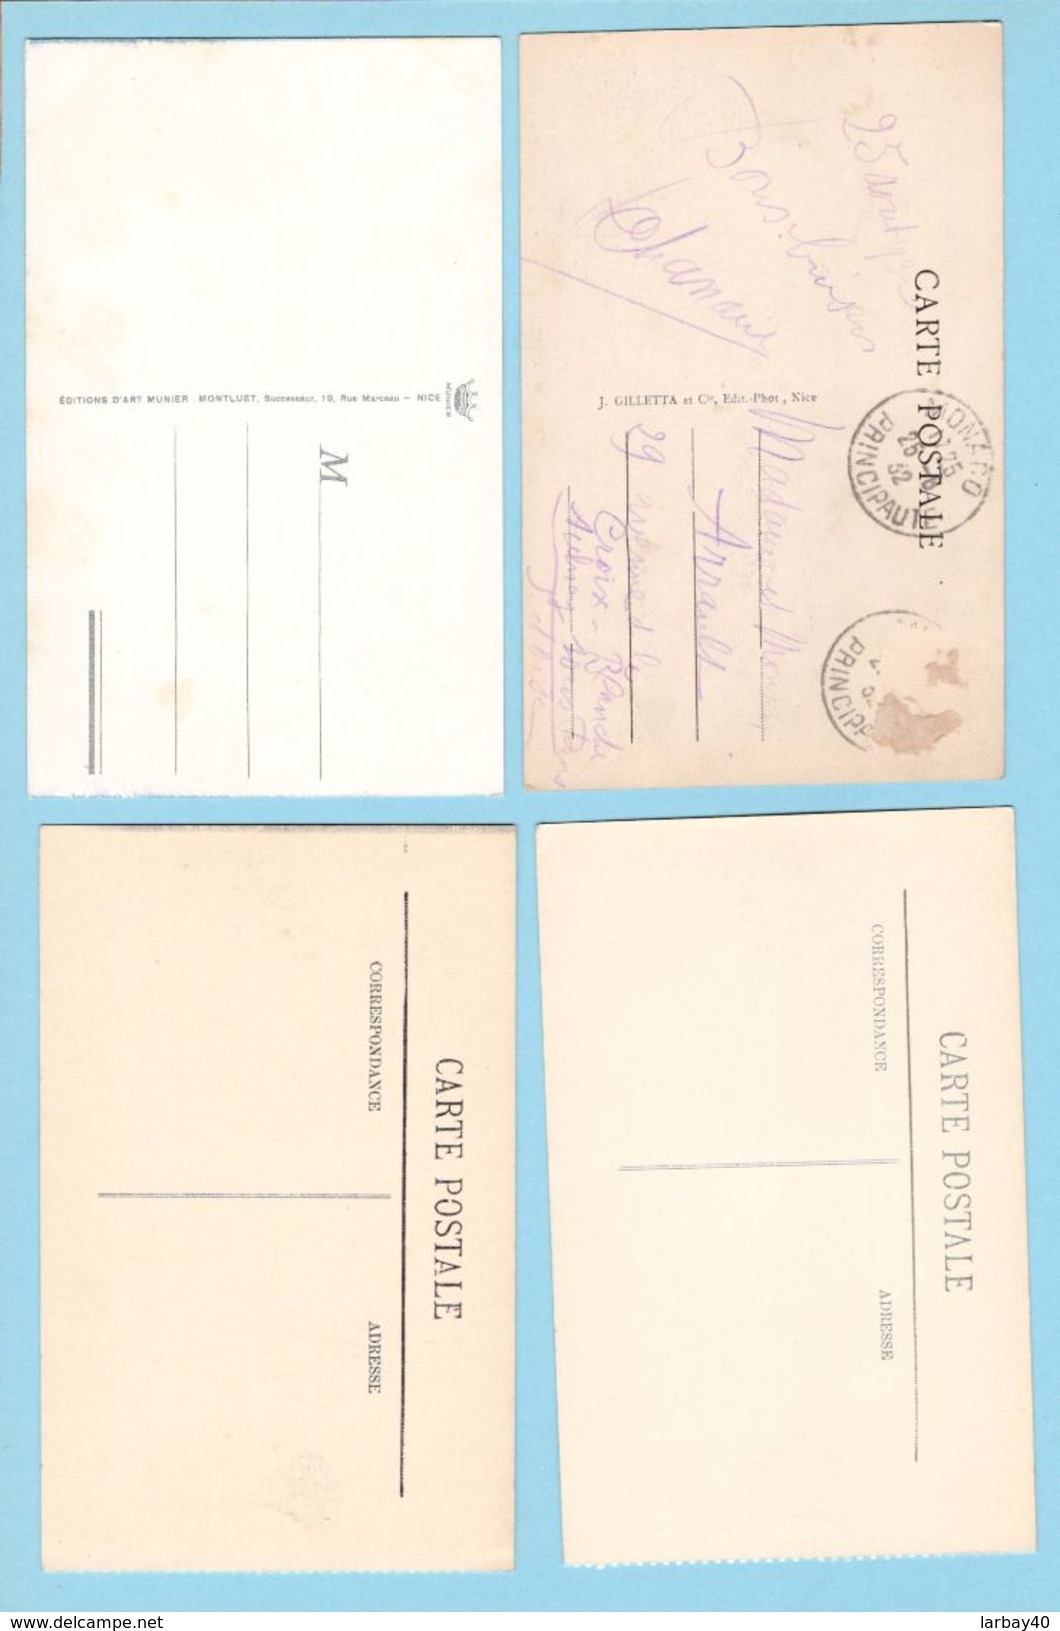 Lot De 12 Cpa Carte Postale Ancienne  - Monaco Monte Carlo   Ect - Verzamelingen